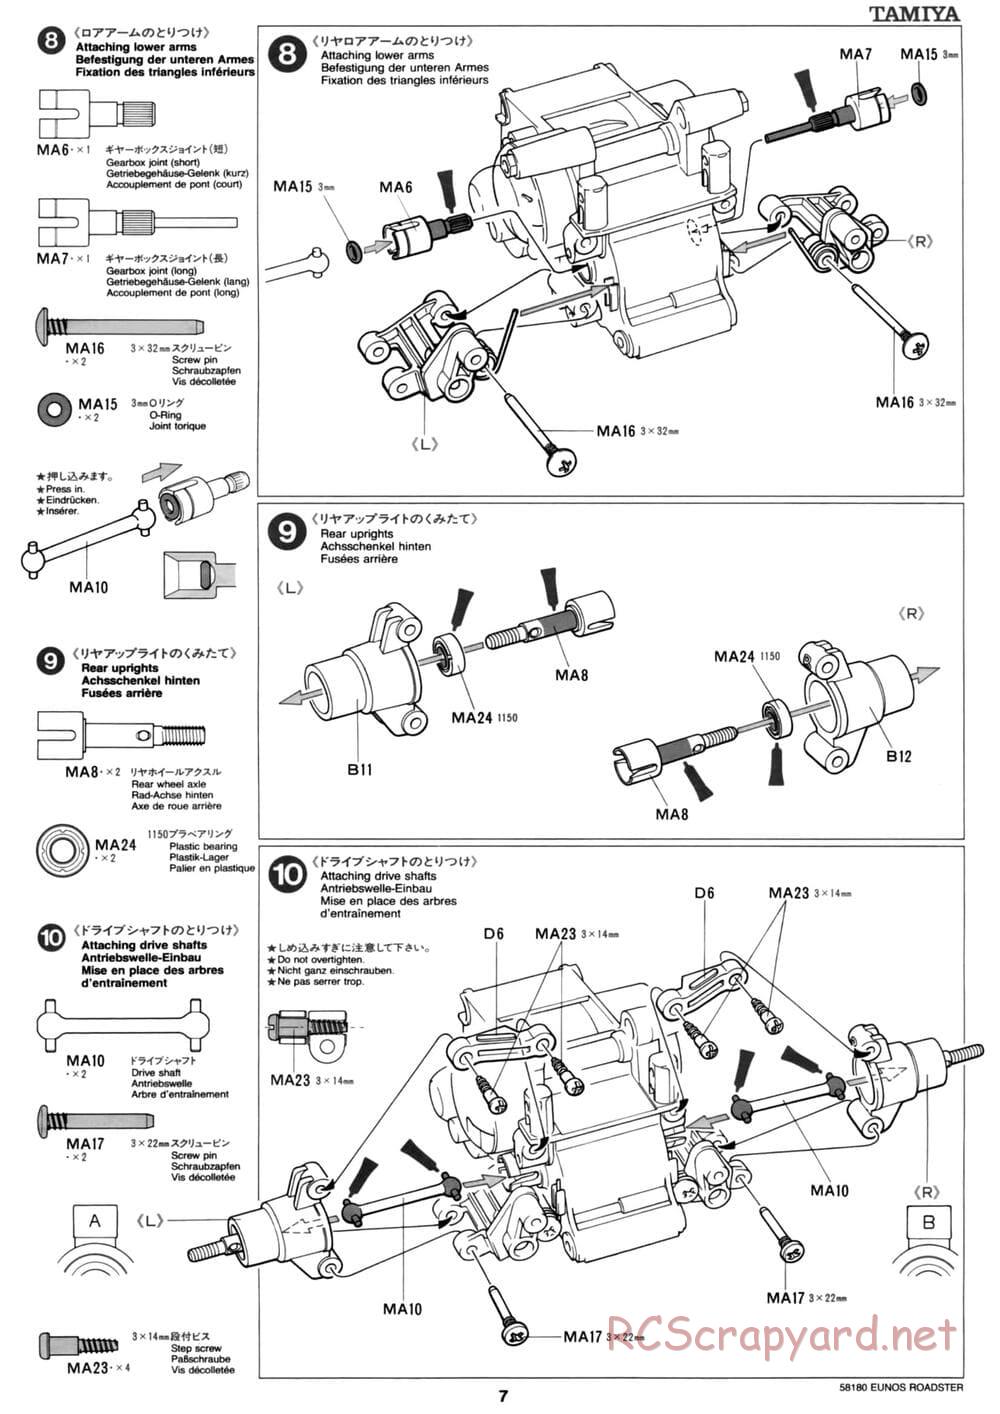 Tamiya - Eunos Roadster - M02M Chassis - Manual - Page 7